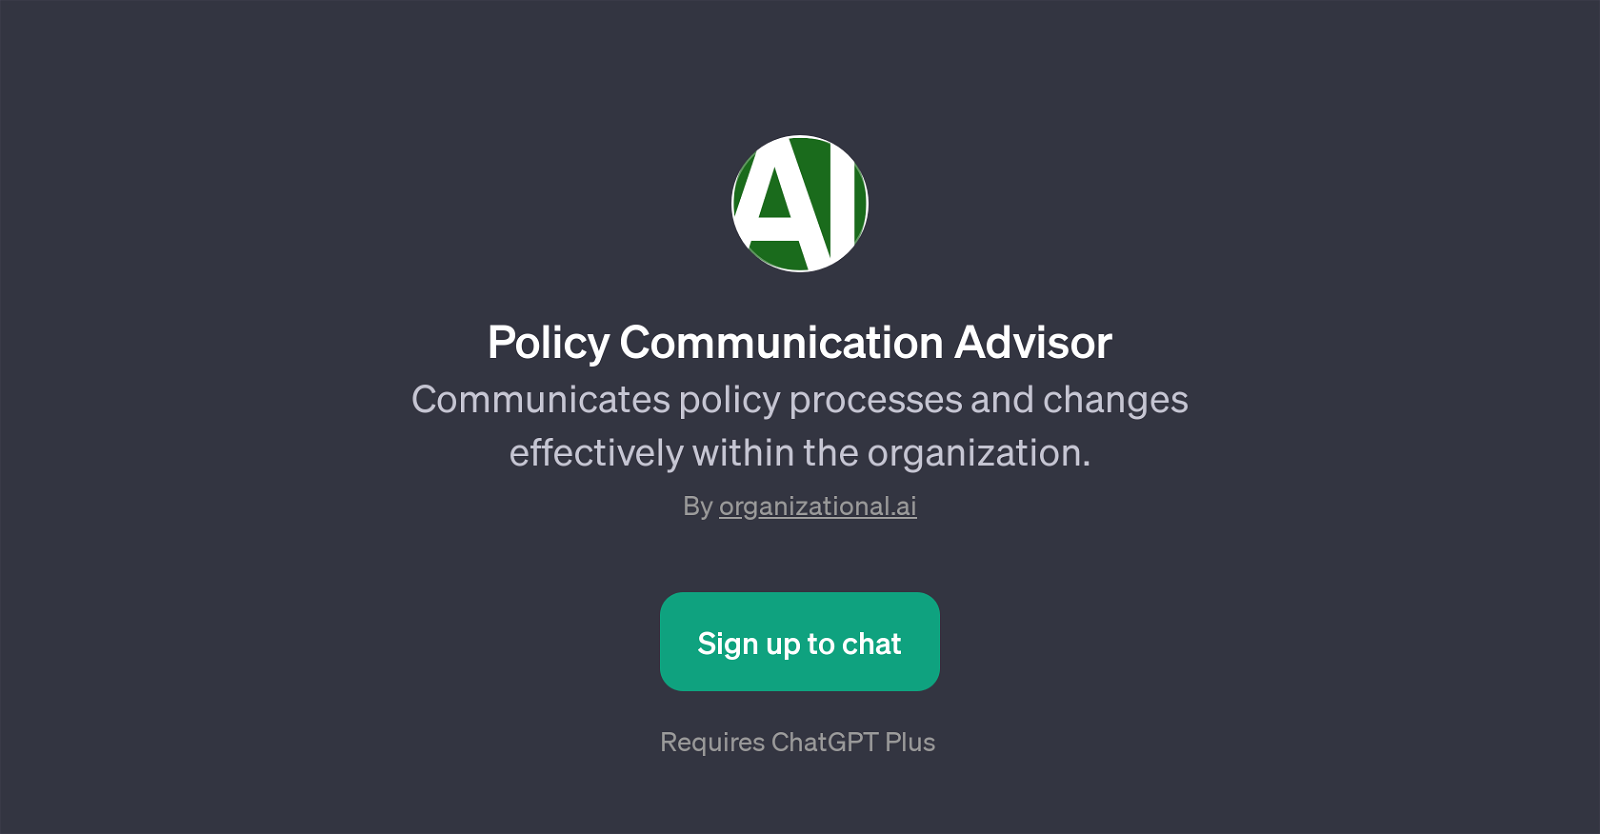 Policy Communication Advisor website